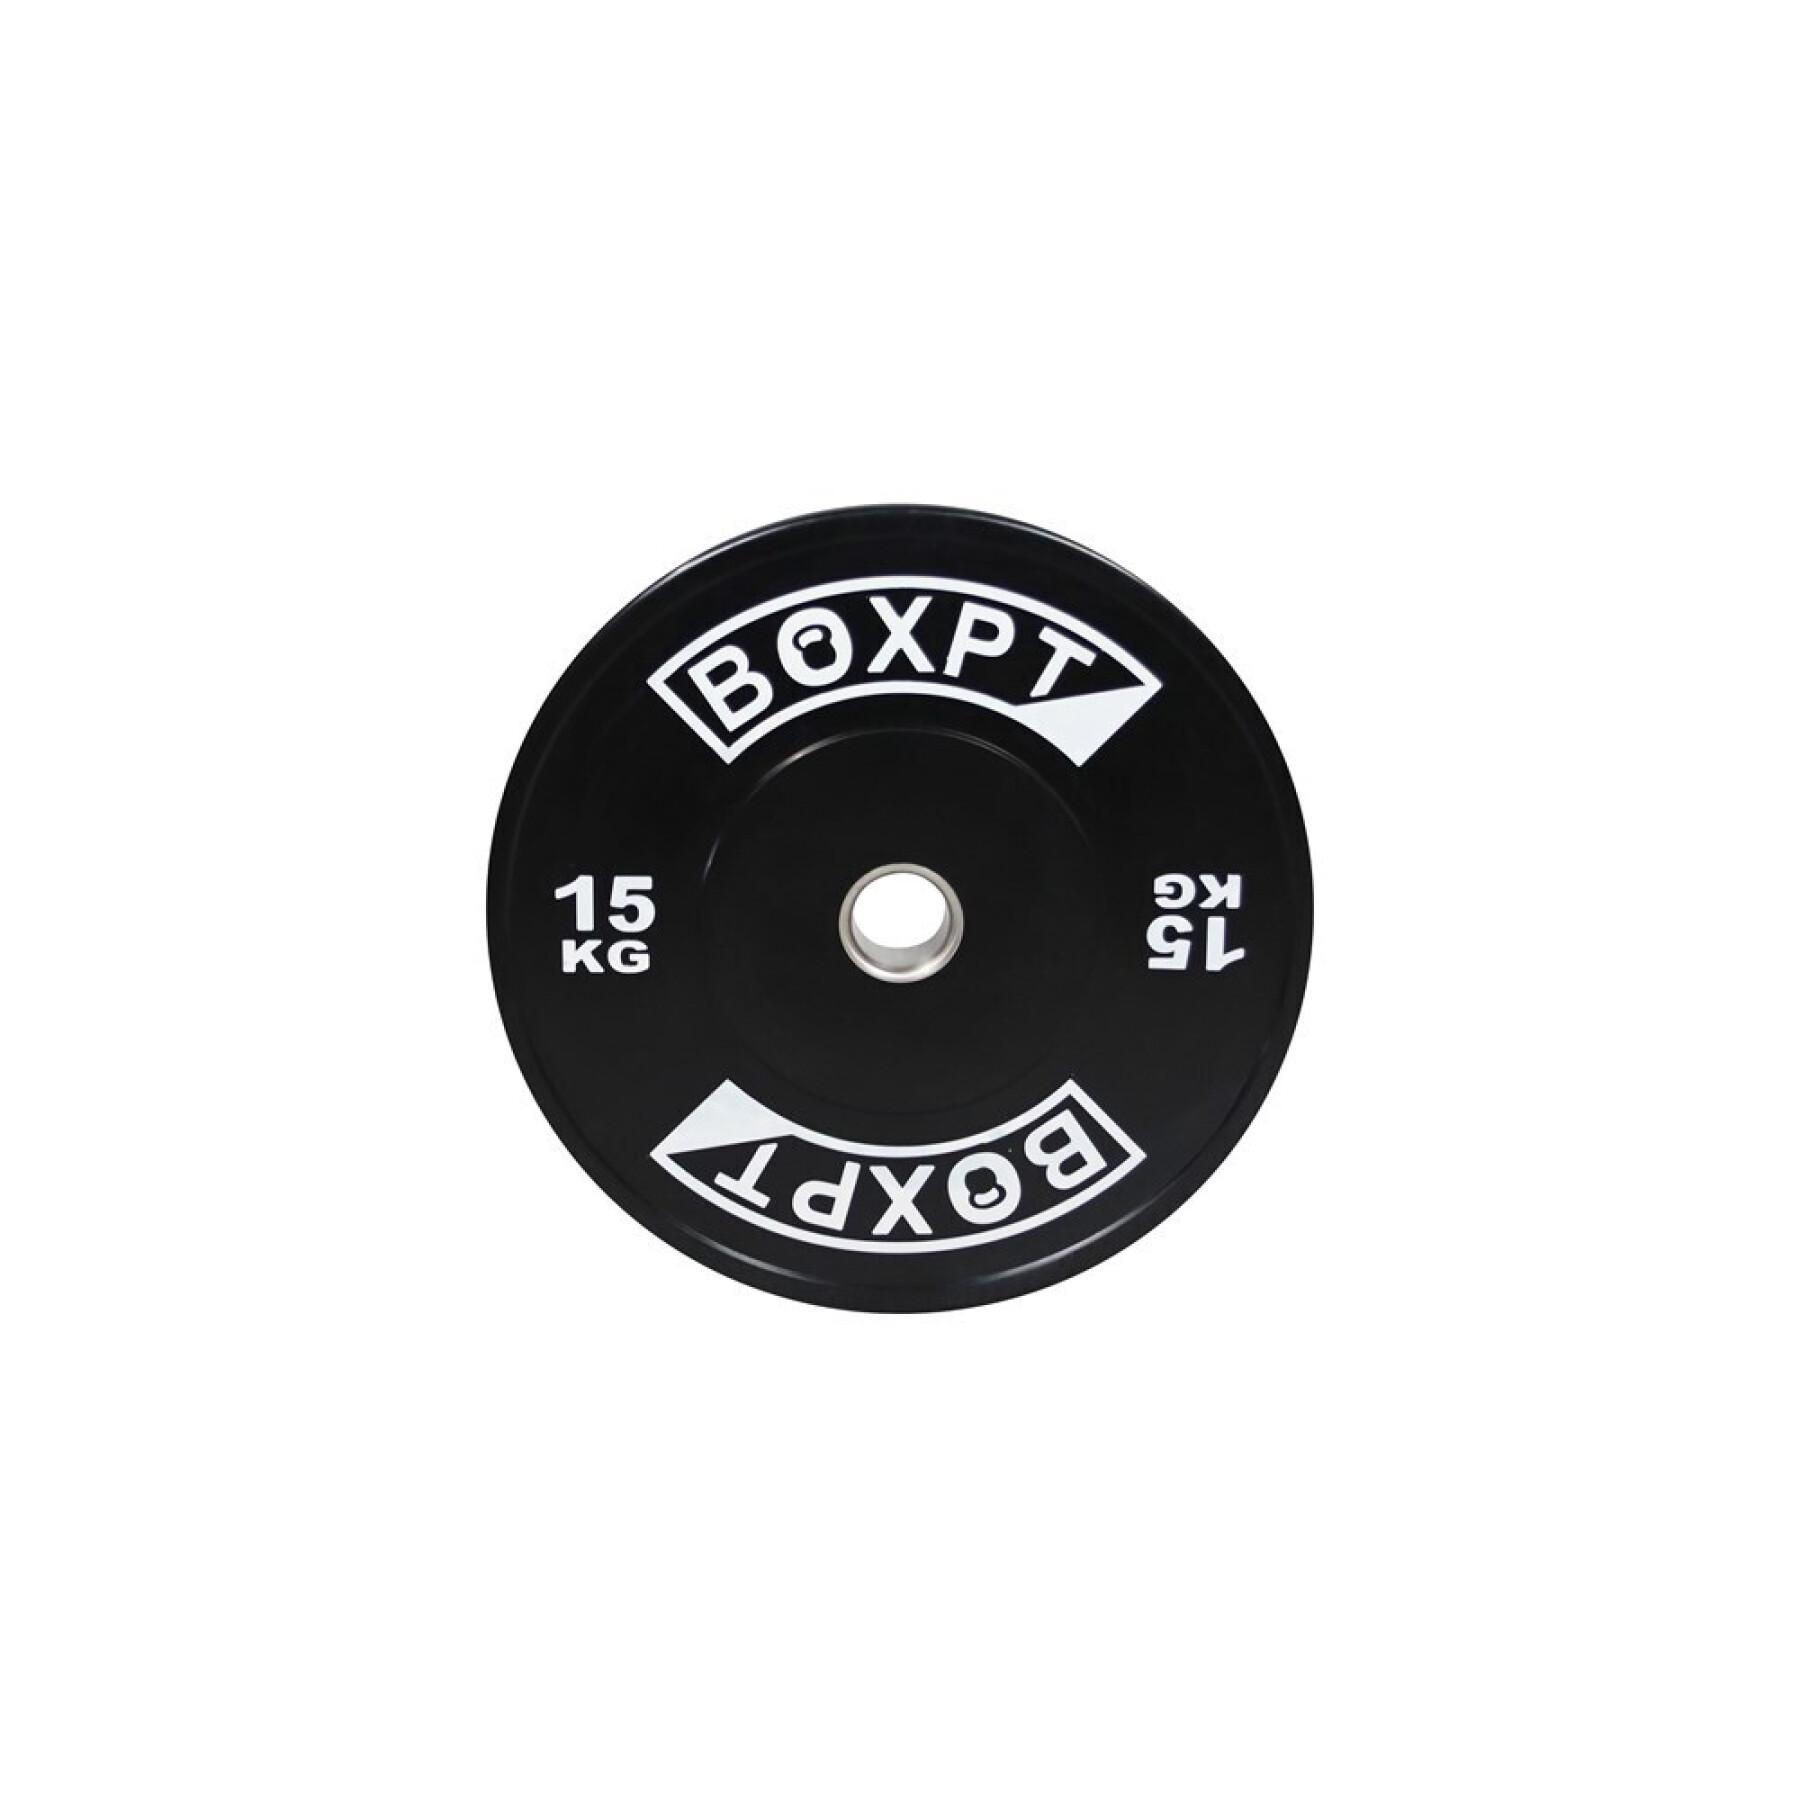 Disco de musculación Boxpt 2.0 - 15 kg